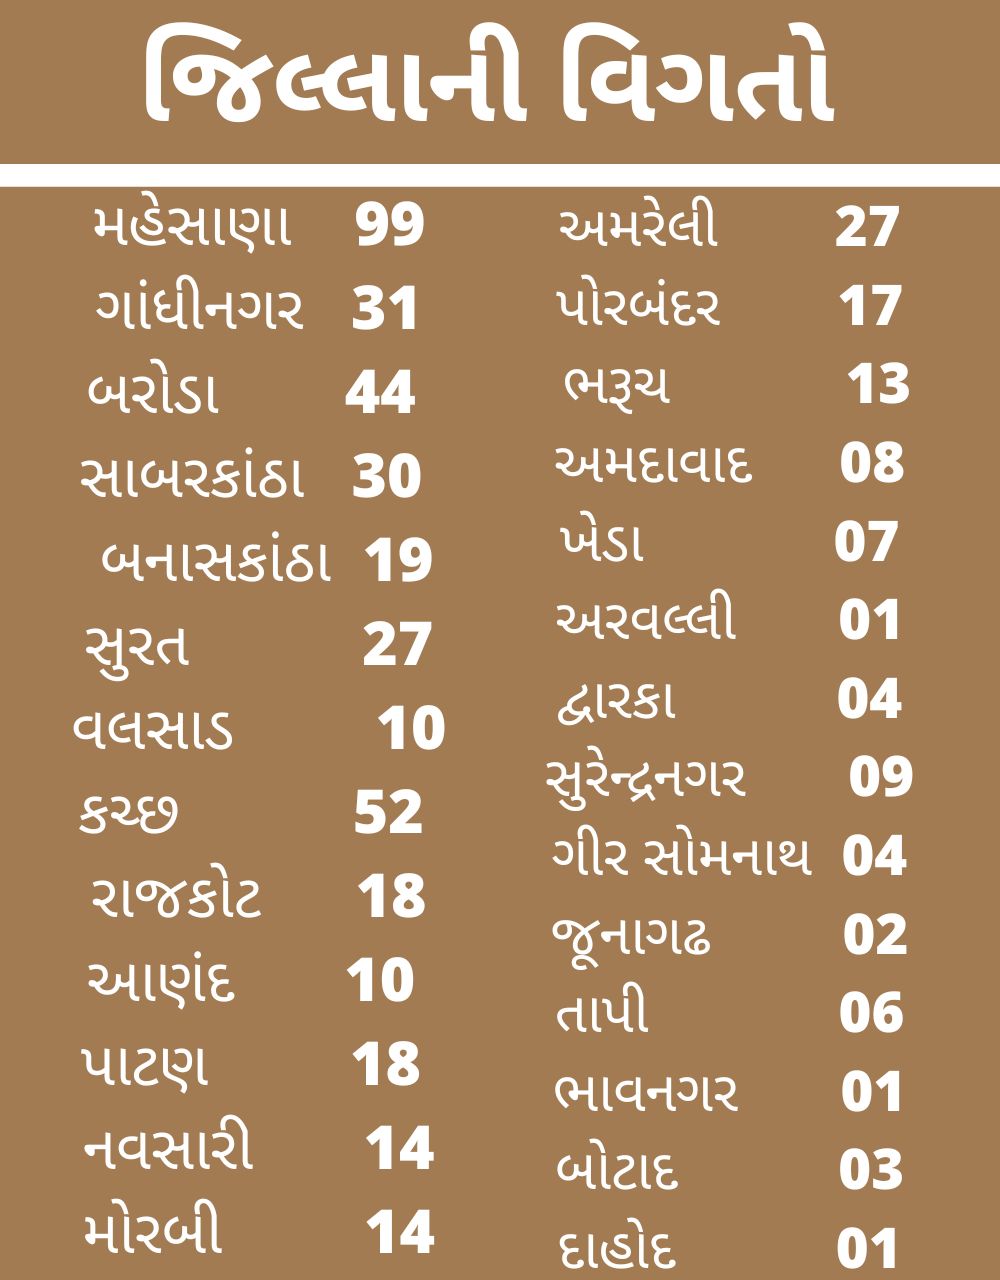 Corona Cases Update : ગુજરાતમાં 1012 તો દેશમાં 20,409 નવા પોઝિટિવ કેસ નોંધાયા